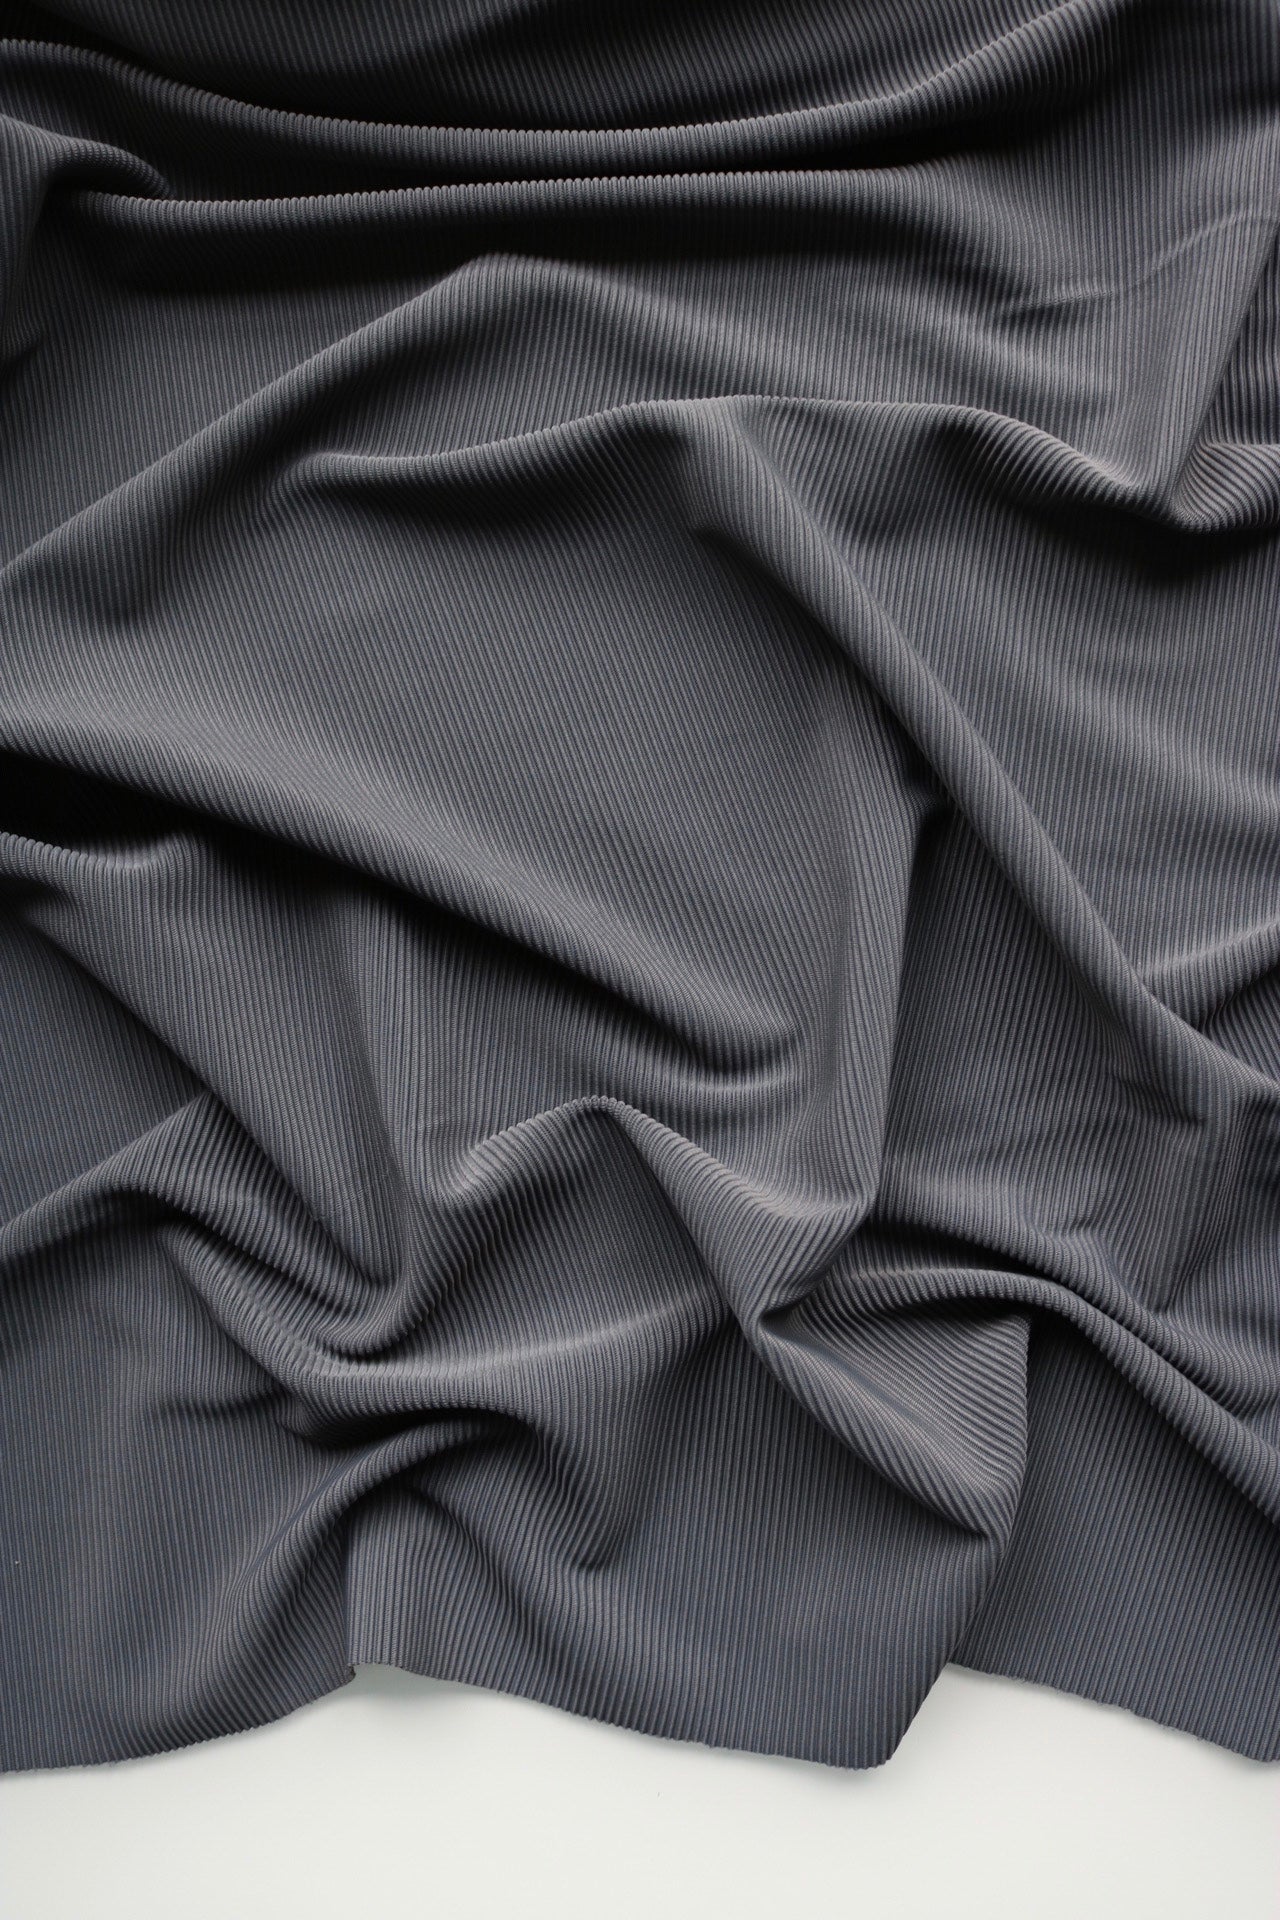 Grey Heather Poly Spandex Athletic Knit Fabric